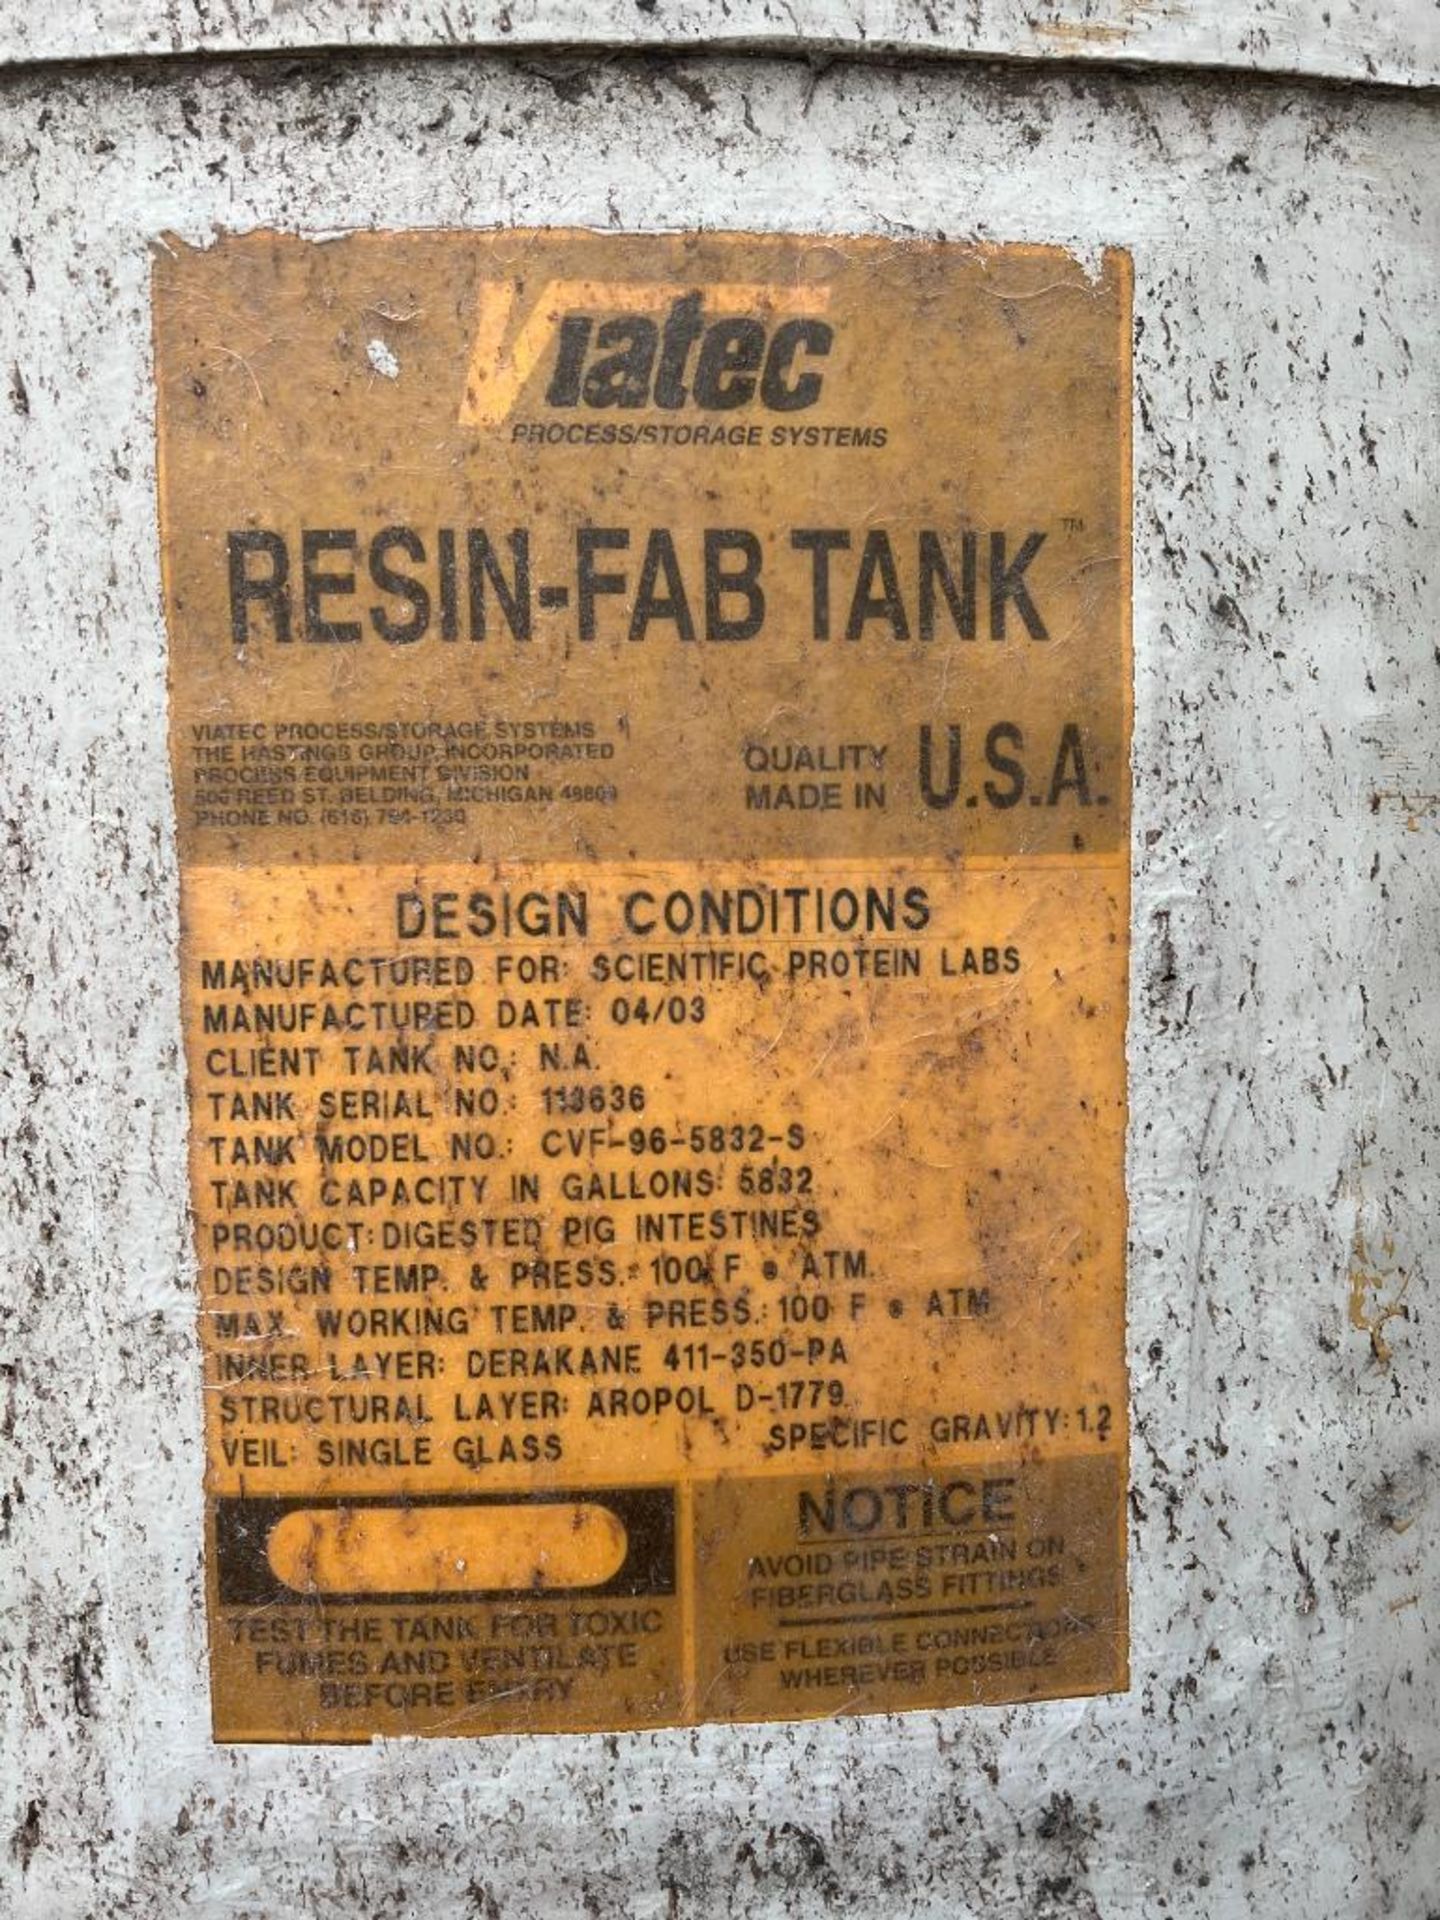 Viatec 6,832 Gallon Resin-Fab Tank, Model: CVF-96-5832-S, S/N: 113636, Outside Diameter= 102" - Rigg - Image 3 of 3